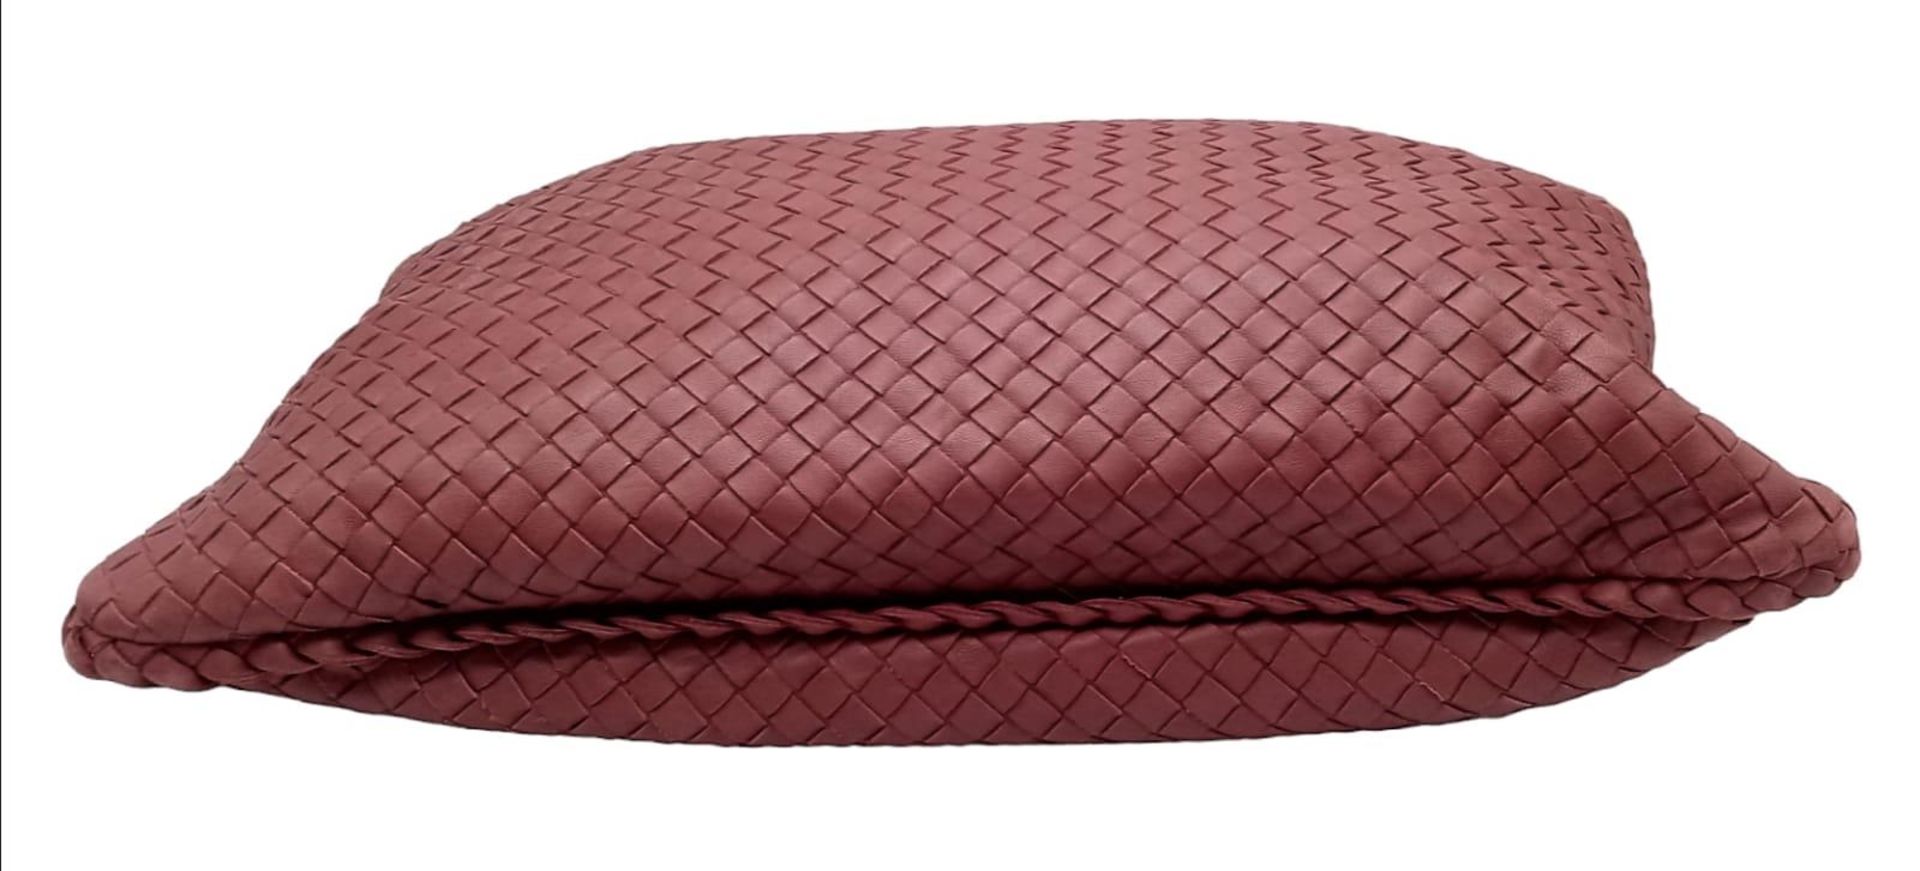 A Bottega Veneta large Hobo bag, soft red nappa leather, beige interior, gold tone top zipper. - Image 5 of 10